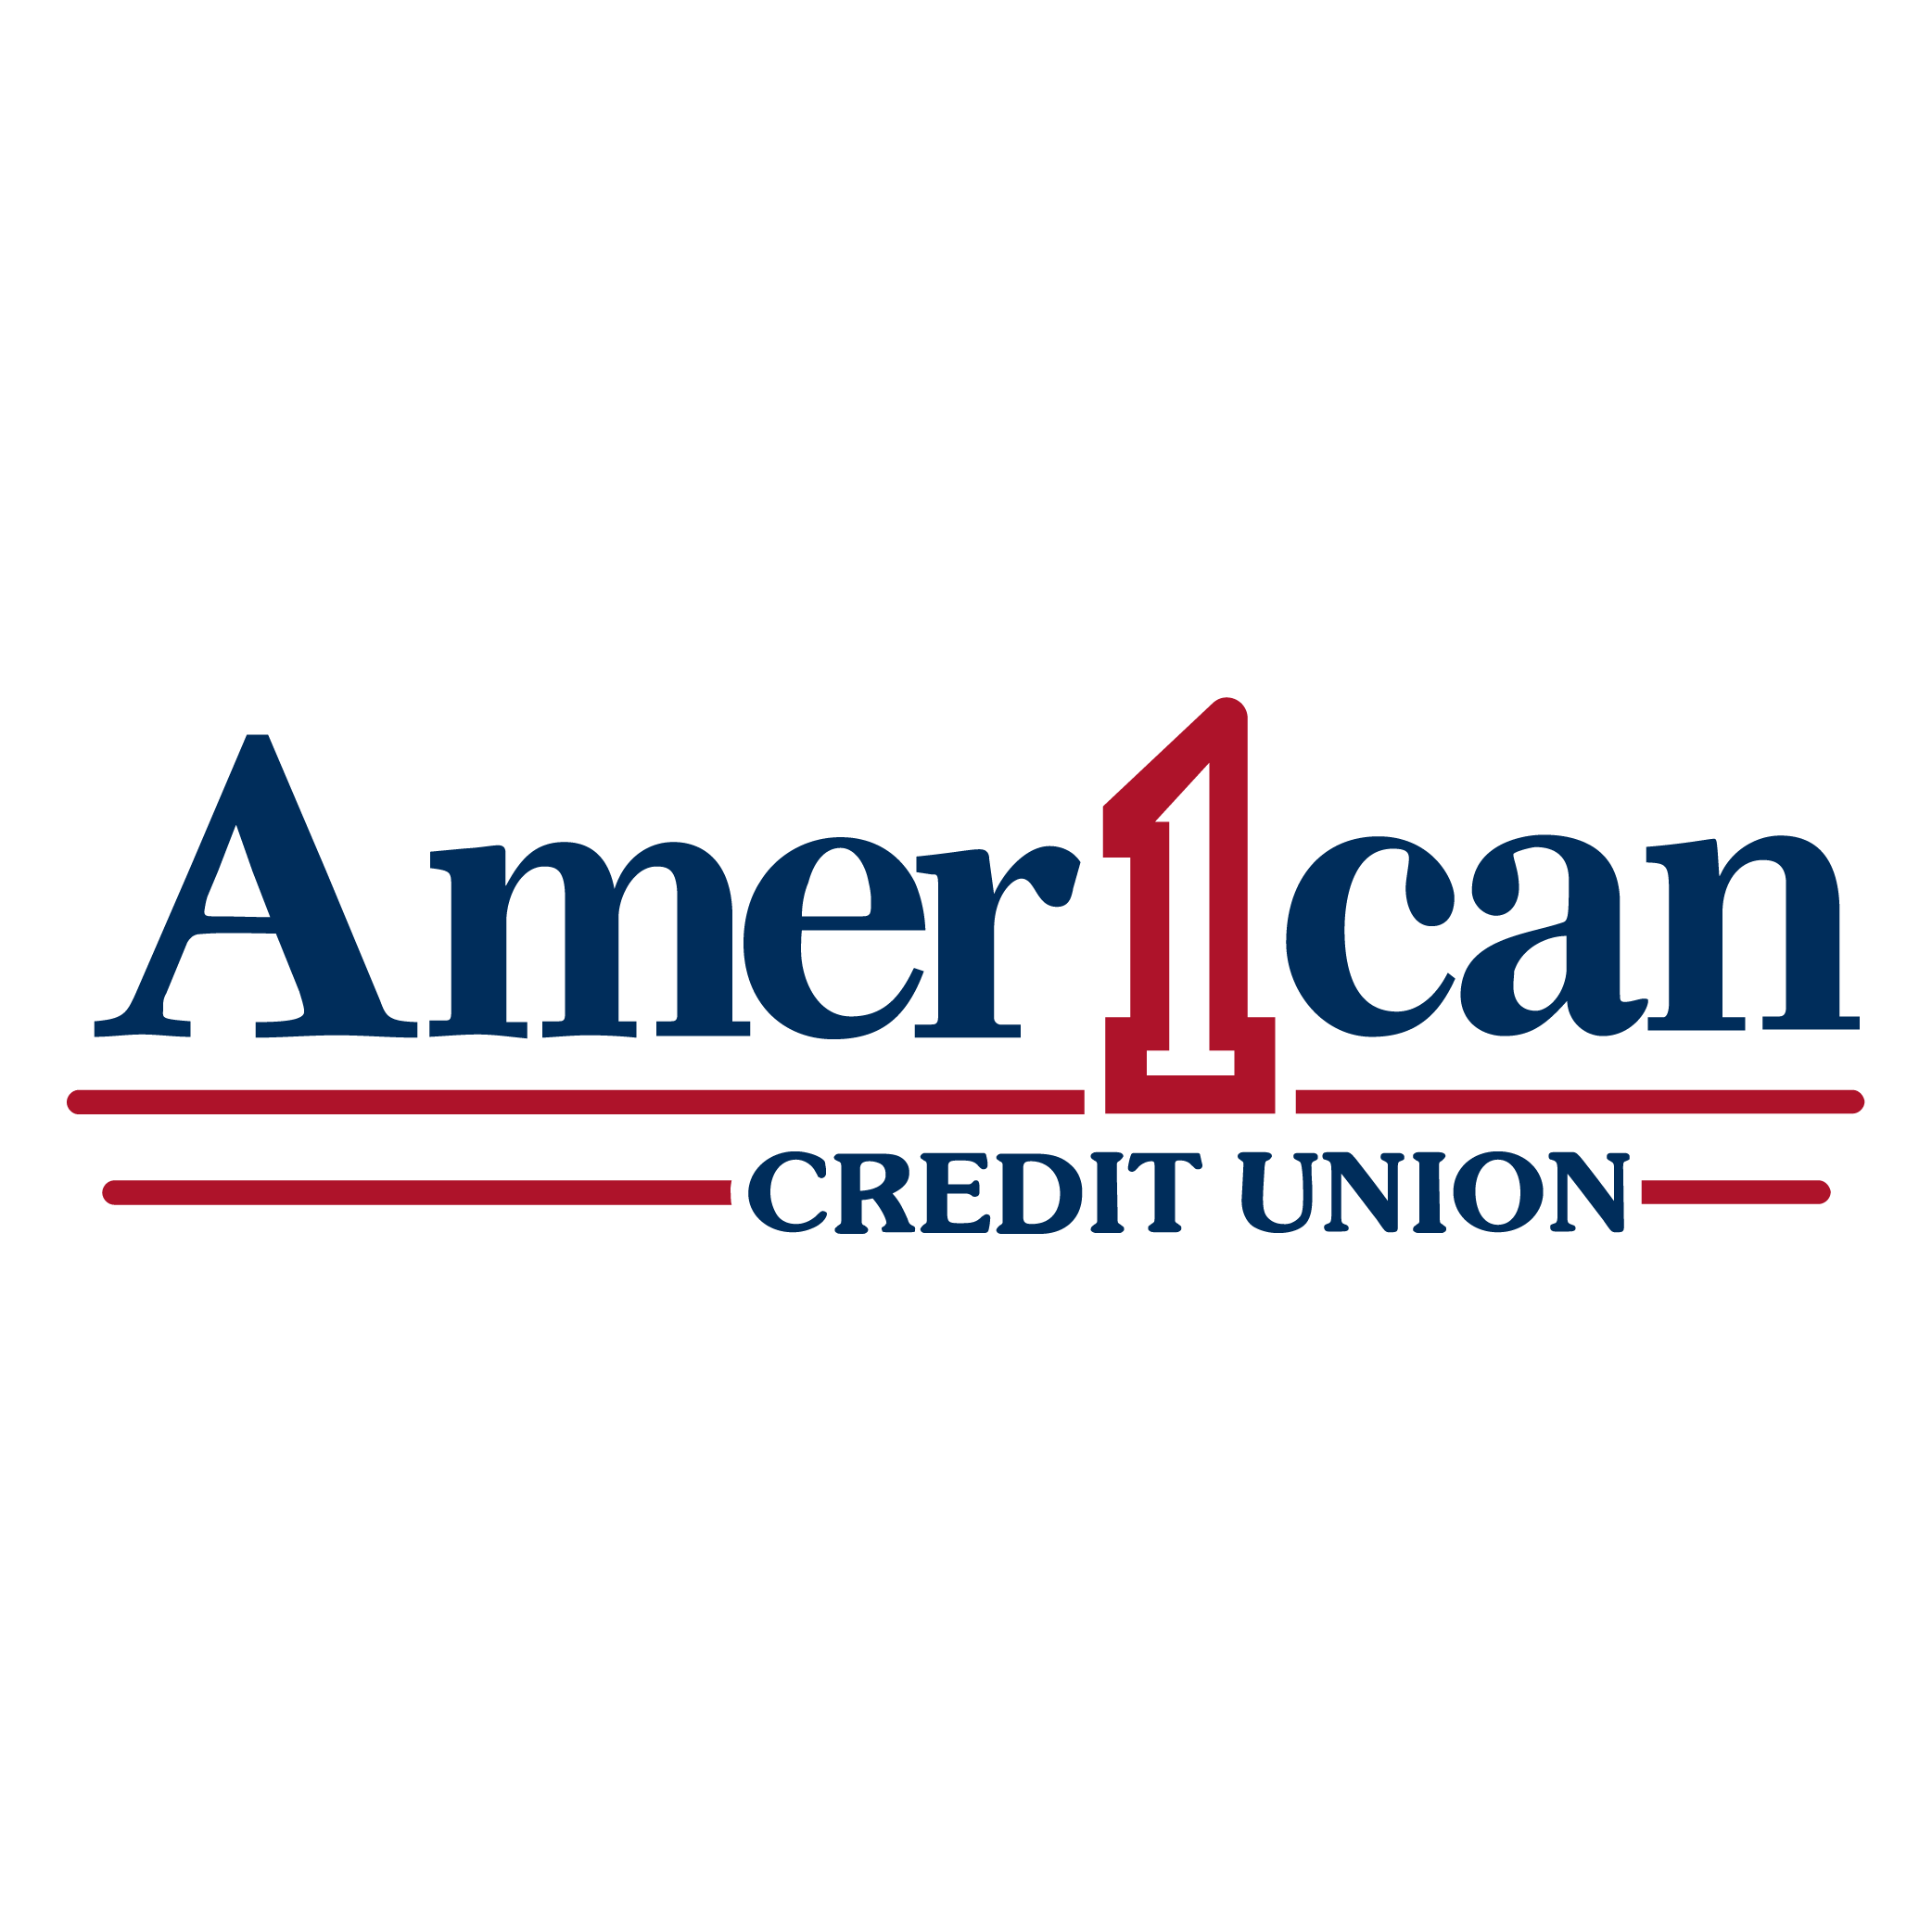 Amer1can Credit Union Logo